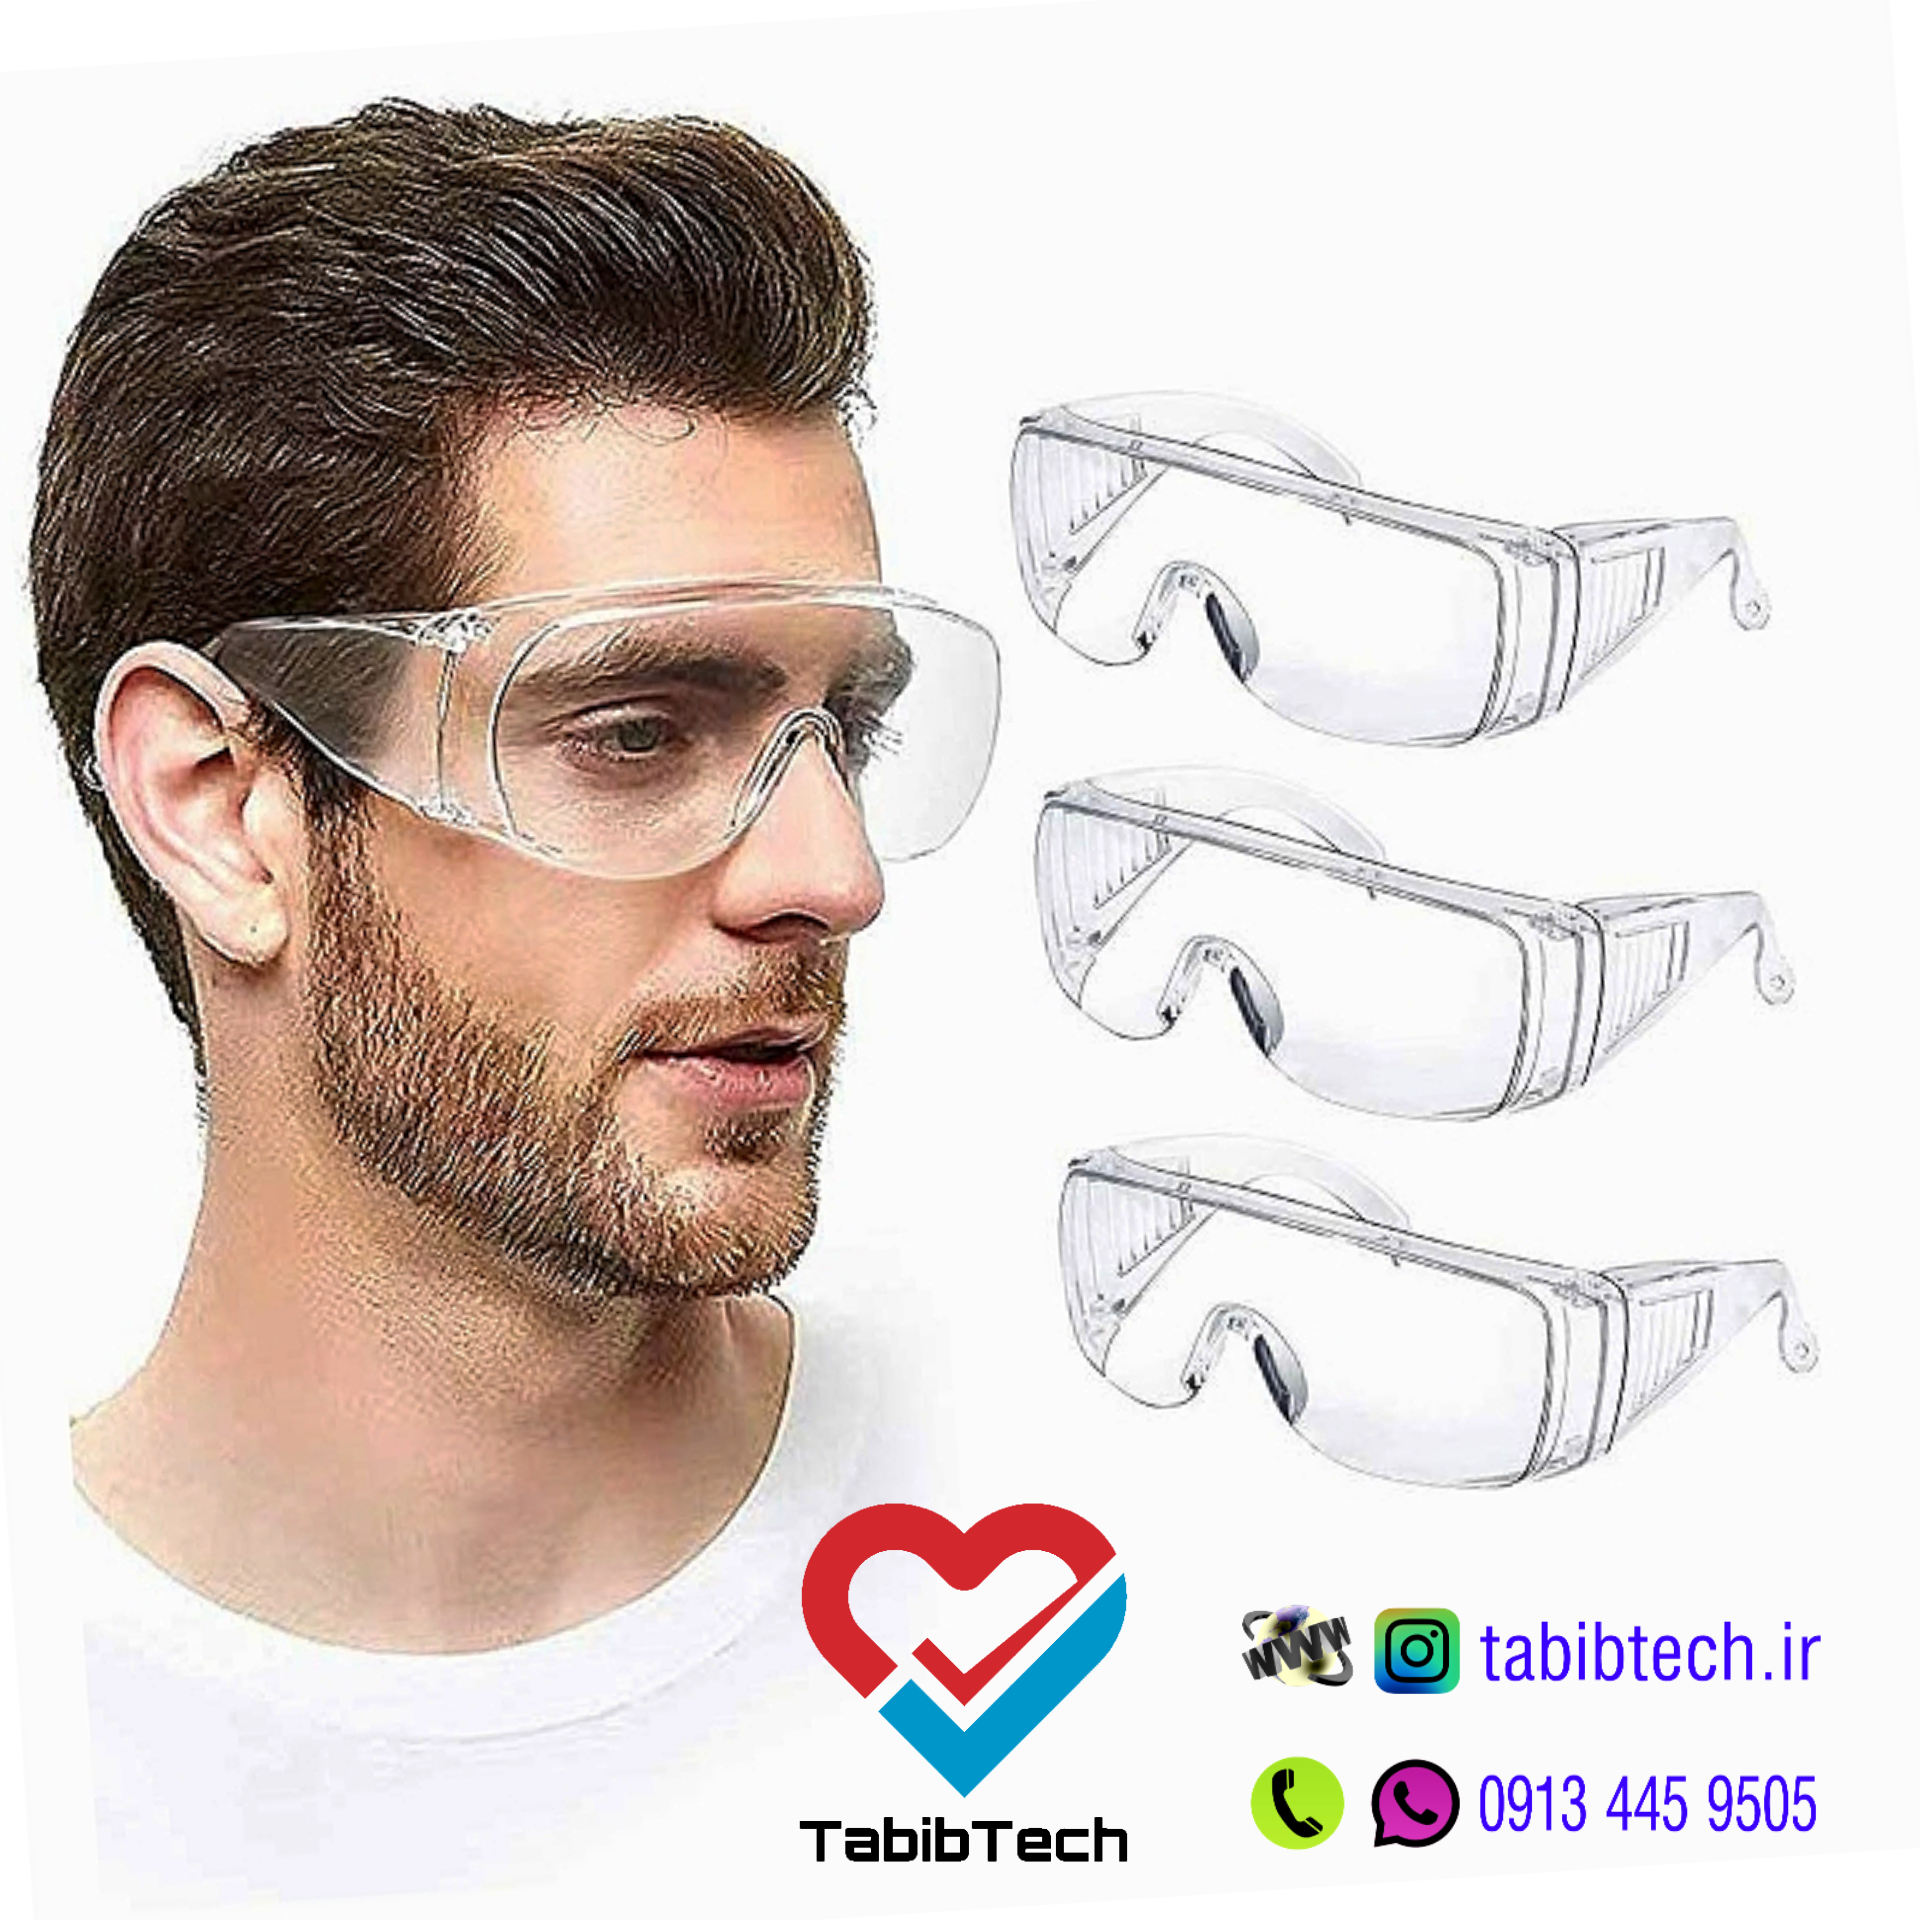 tabibtech.ir عینک ایمنی آزمایشگاهی ، پزشکی ، مهندسی ، دوچرخه سواری